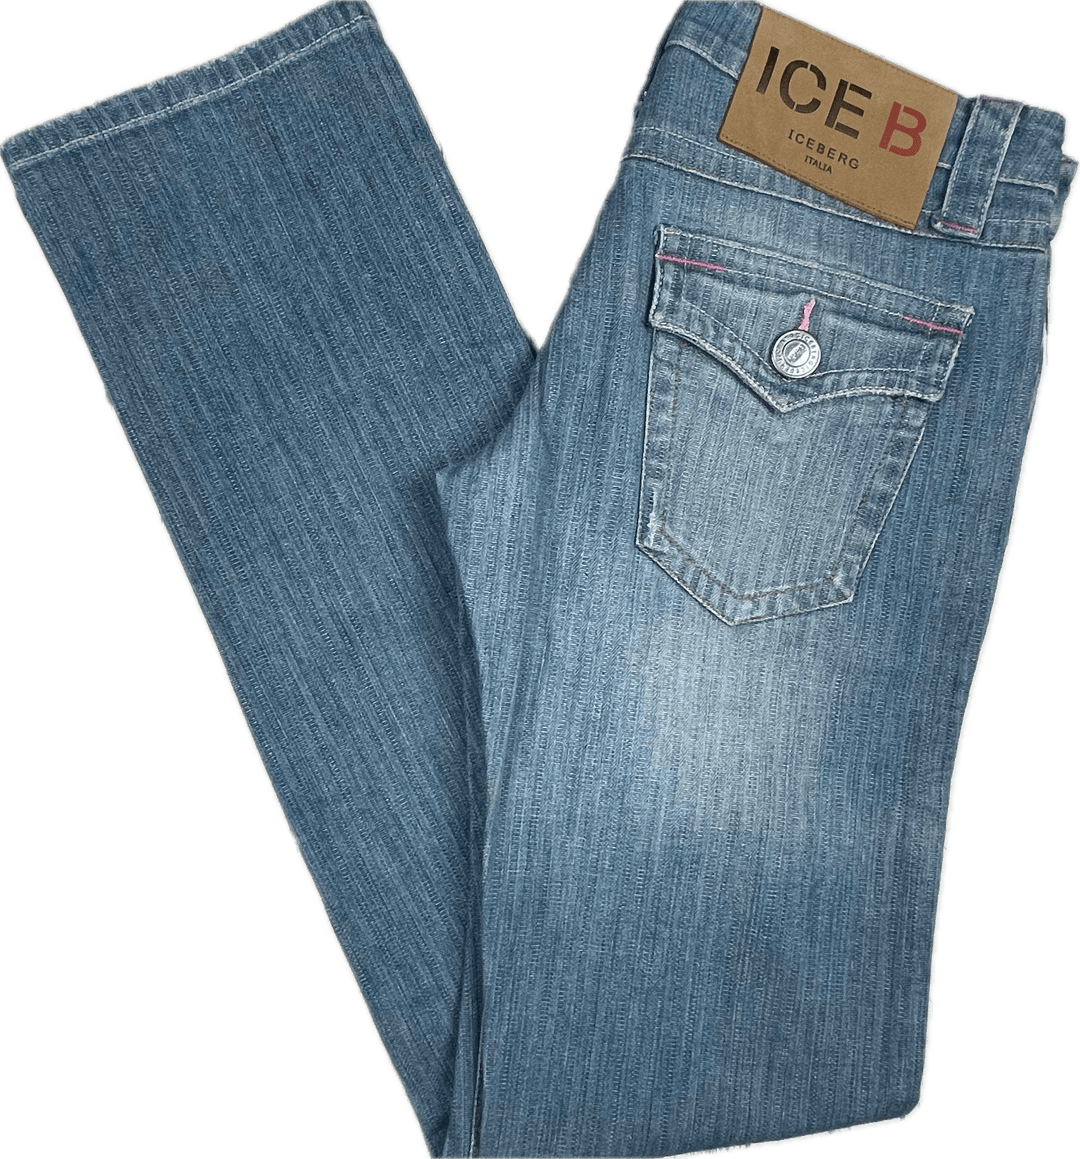 NEW - Iceberg Ice B Italian Self Stripe Straight Jeans- Size 28 - Jean Pool